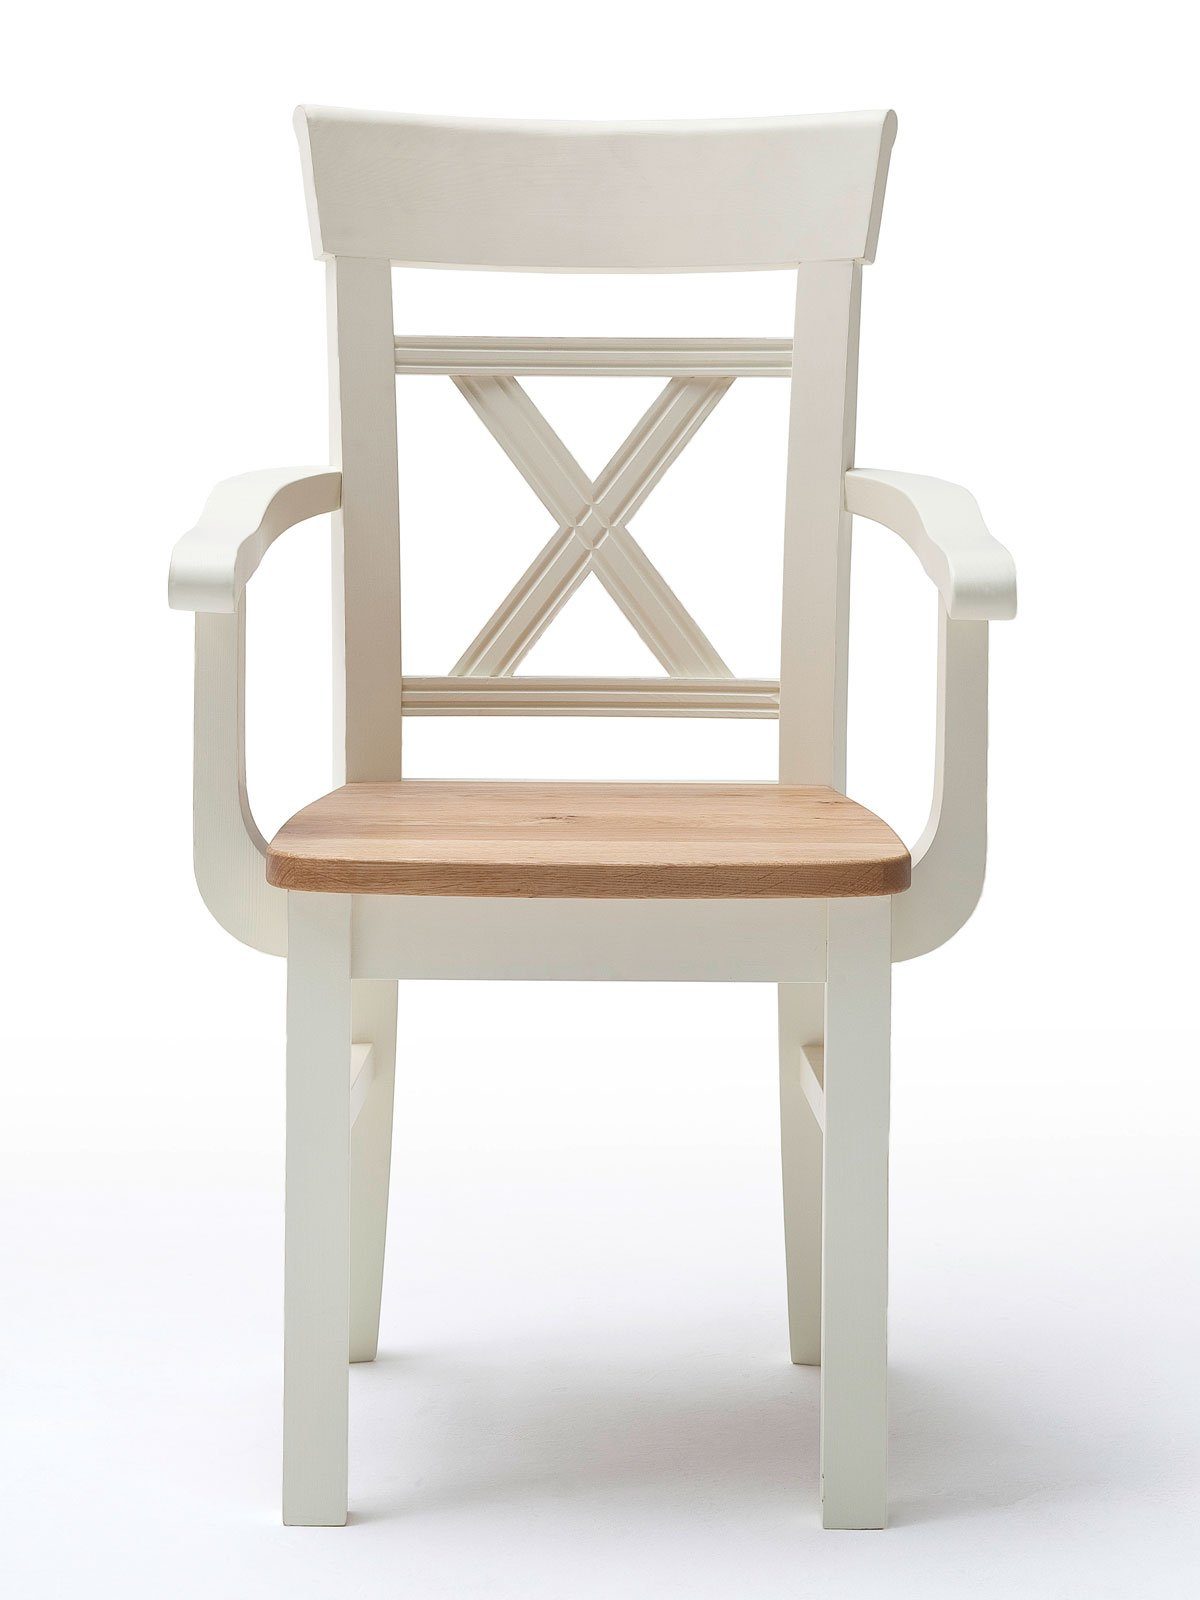 Armlehne Padua panna Massivholzsitzfläche Esszimmer mit Absetzung Esszimmerstuhl mit sierra Stuhl Casamia